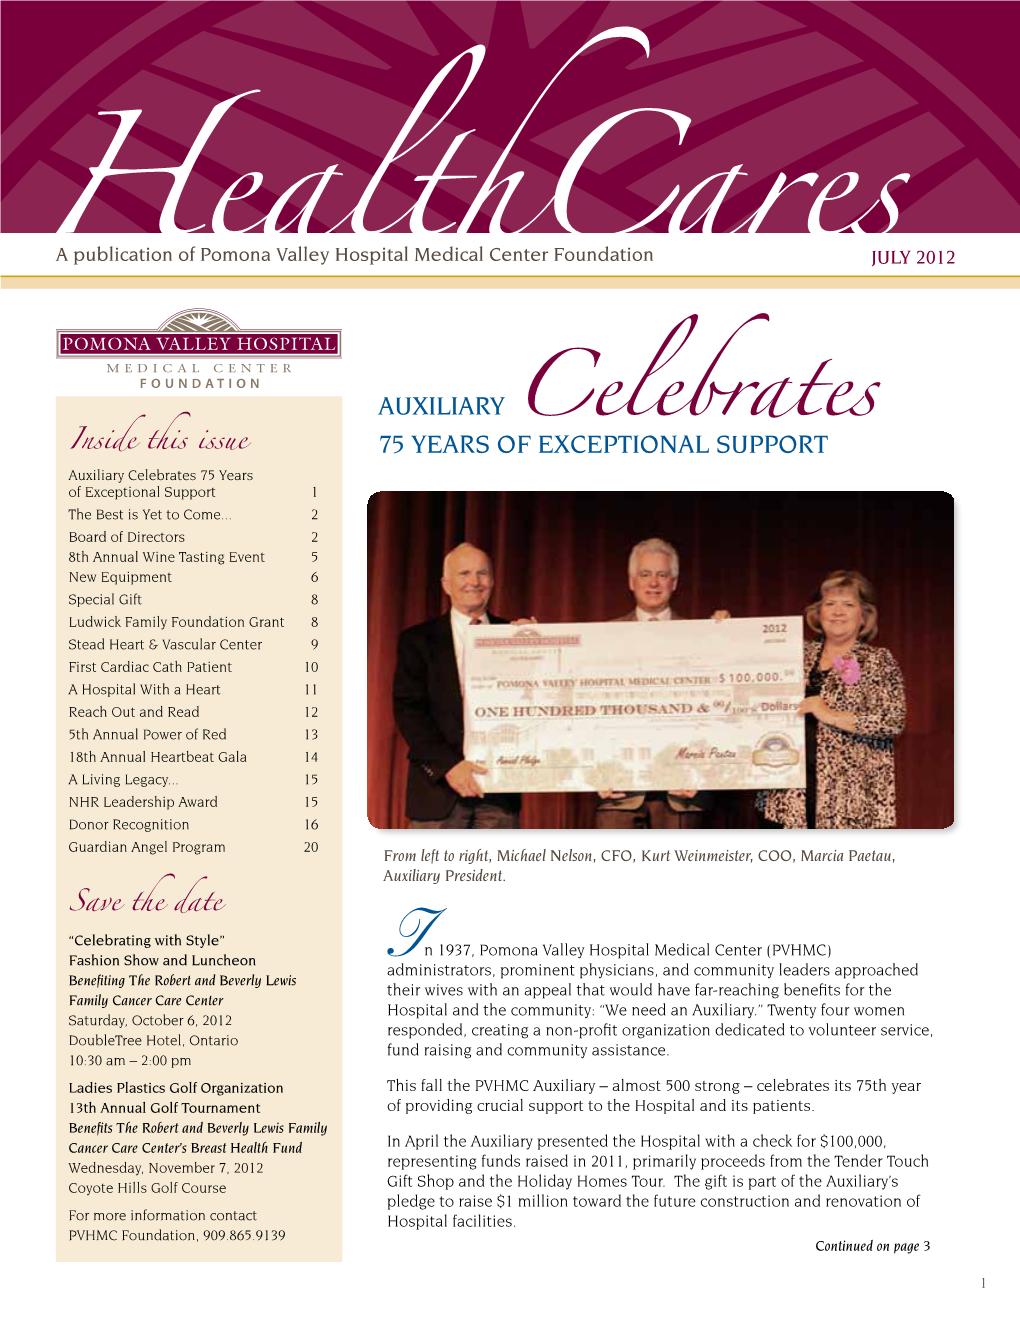 Healthcares July 2012 Publication